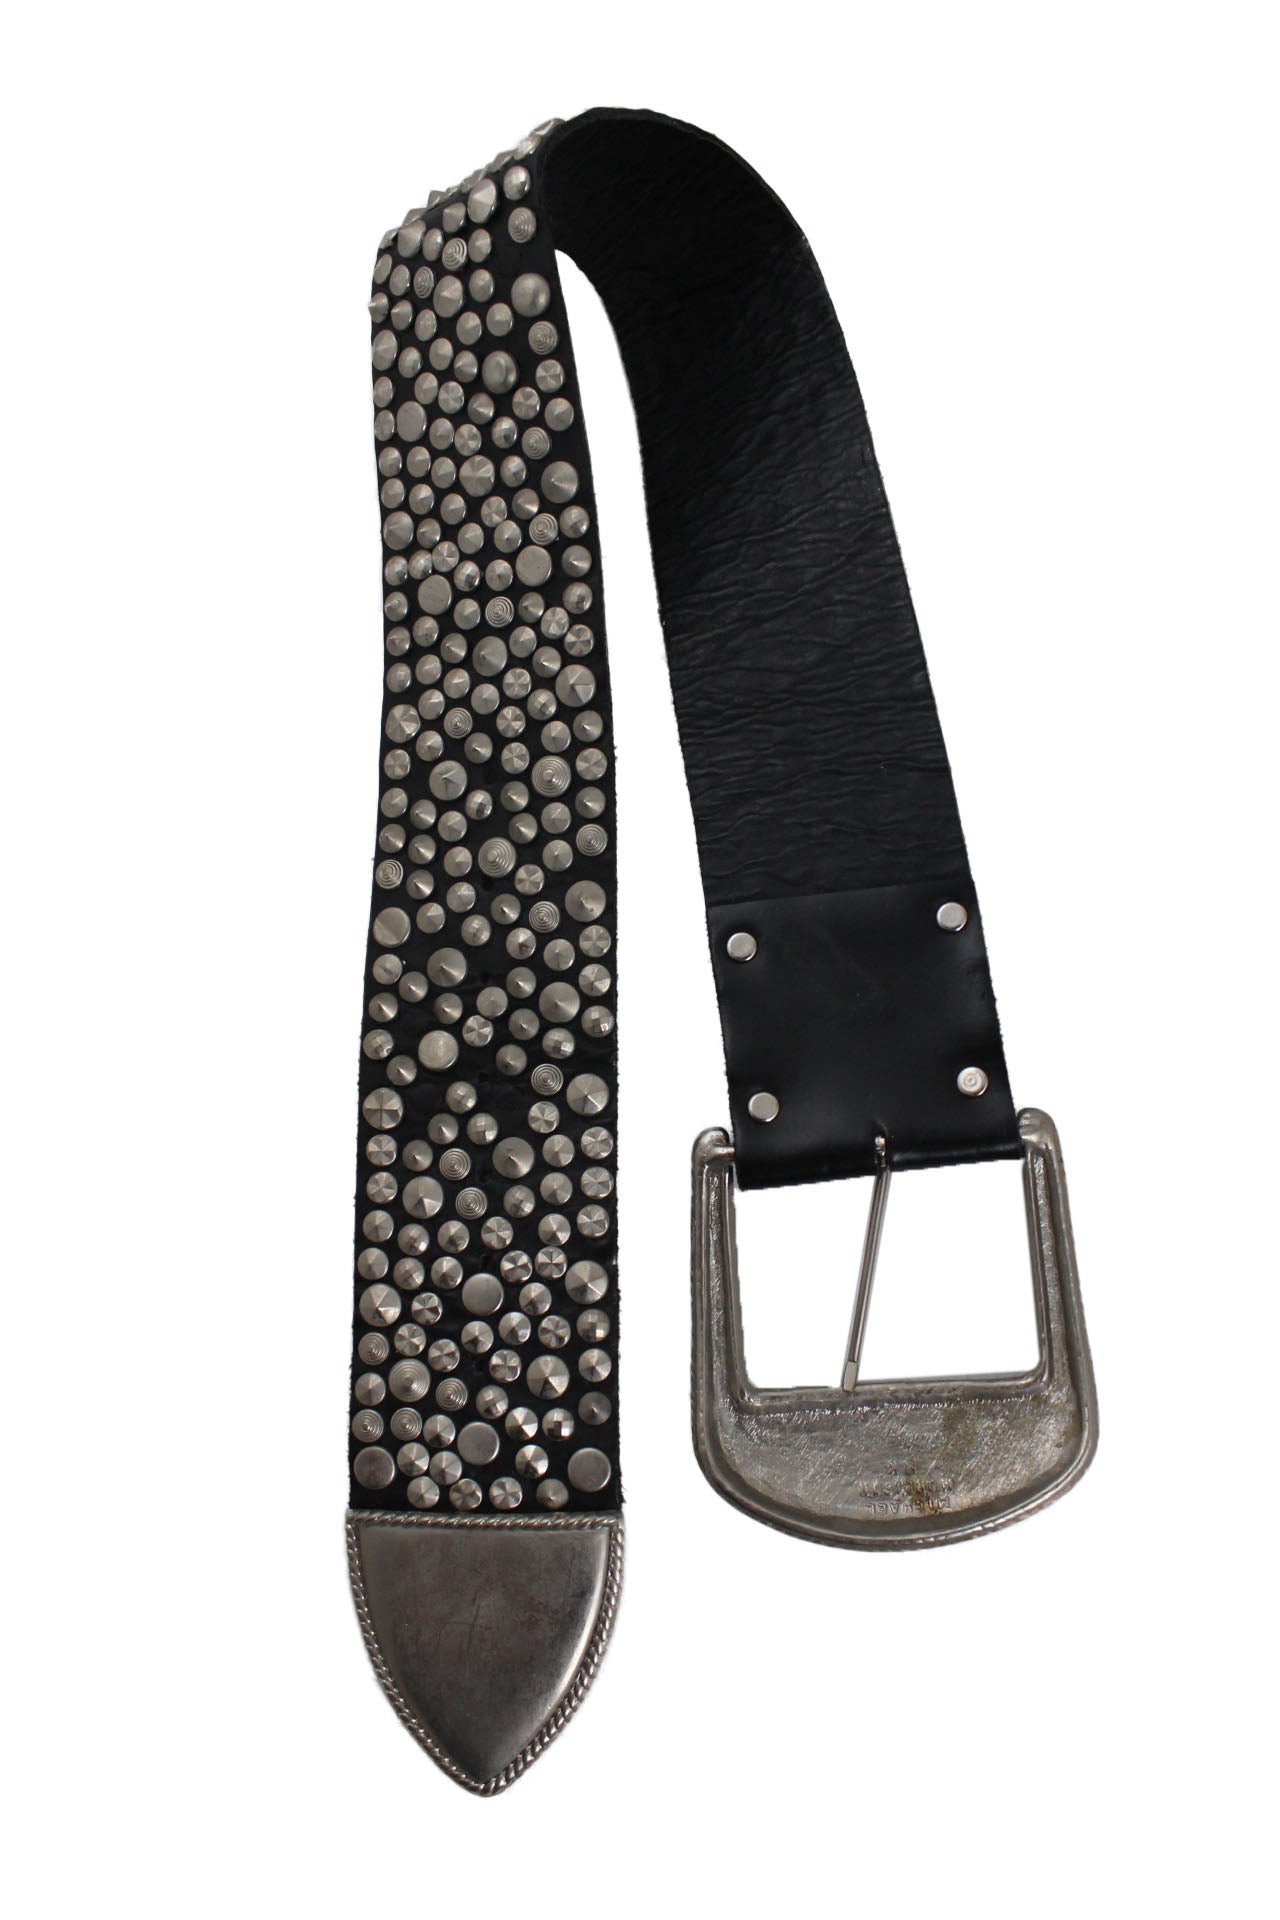 detailed photo of studded belt.